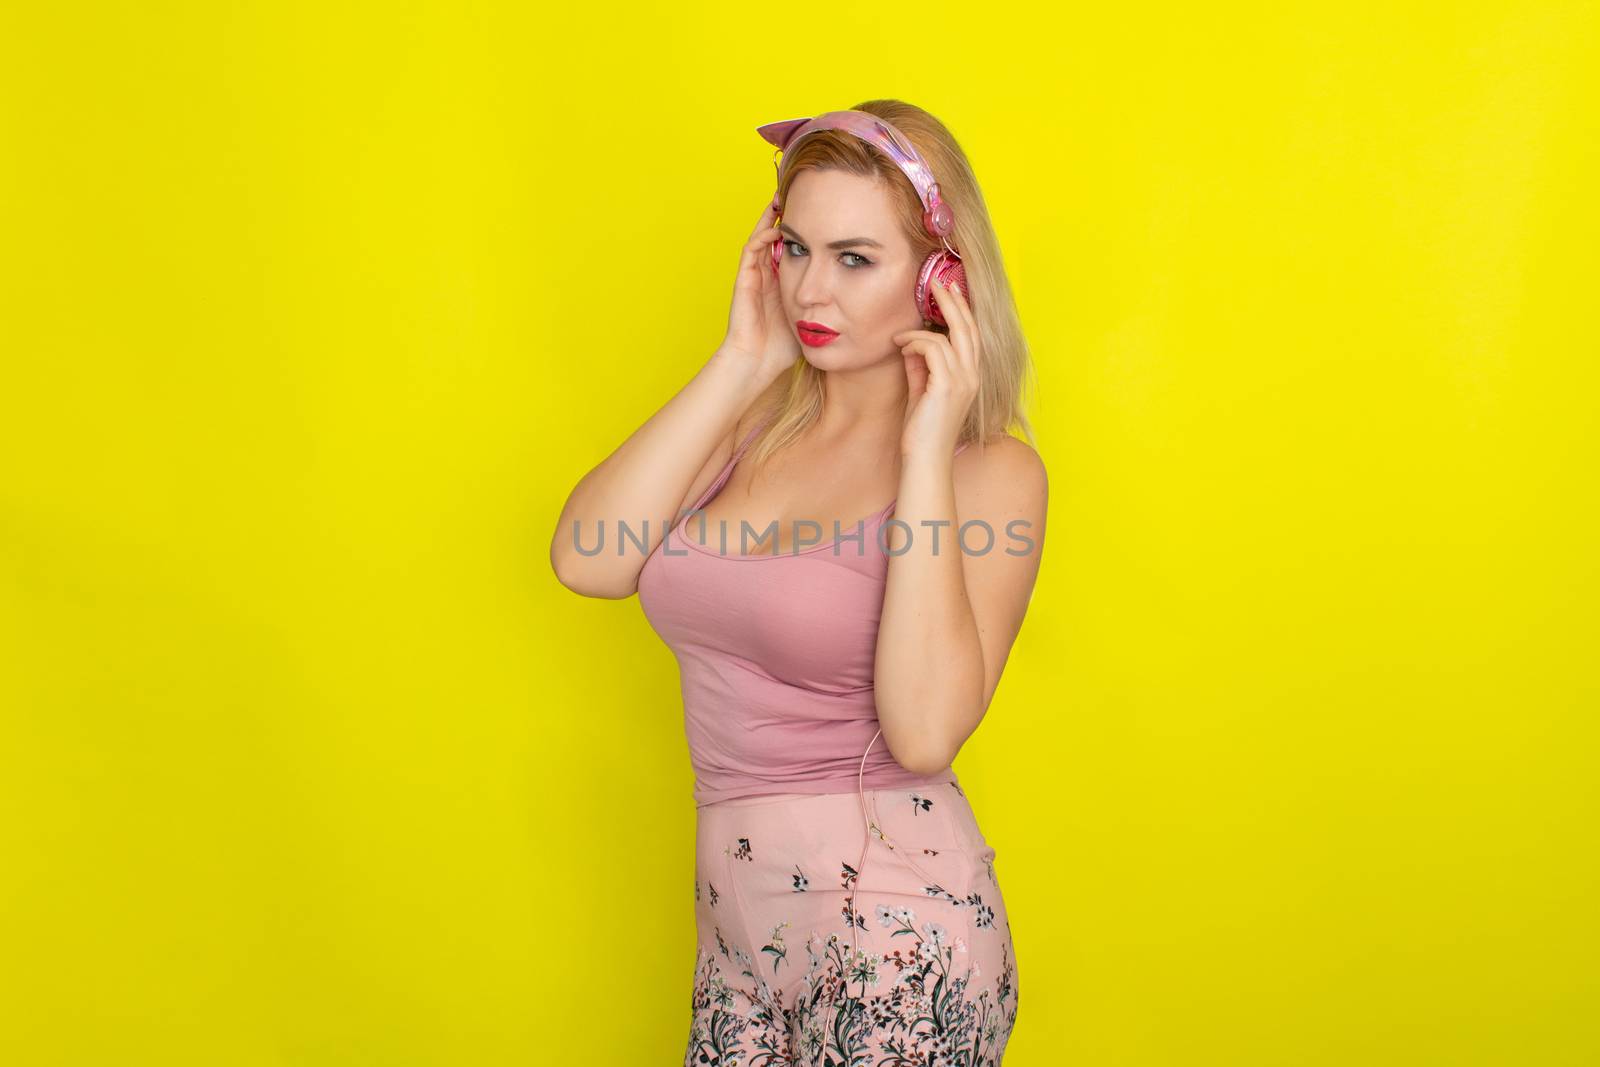 Blonde woman in pink summer clothing wearing pink headphones like kitten ears